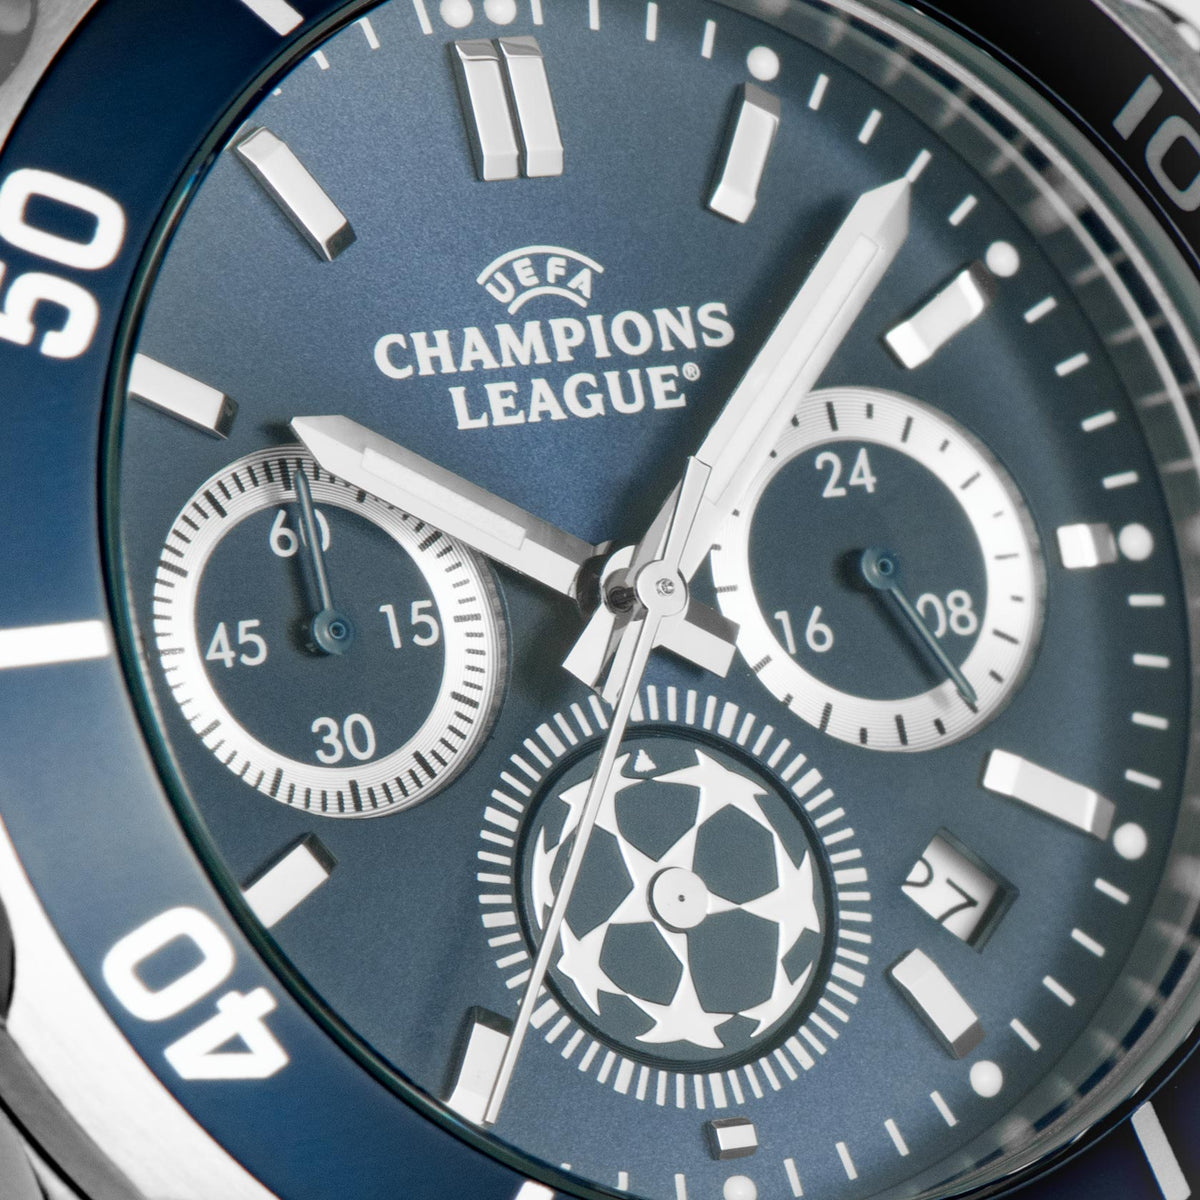 UCL Chronograph CL-103A Jacques Lemans Watch UEFA Club Competitions Online Store